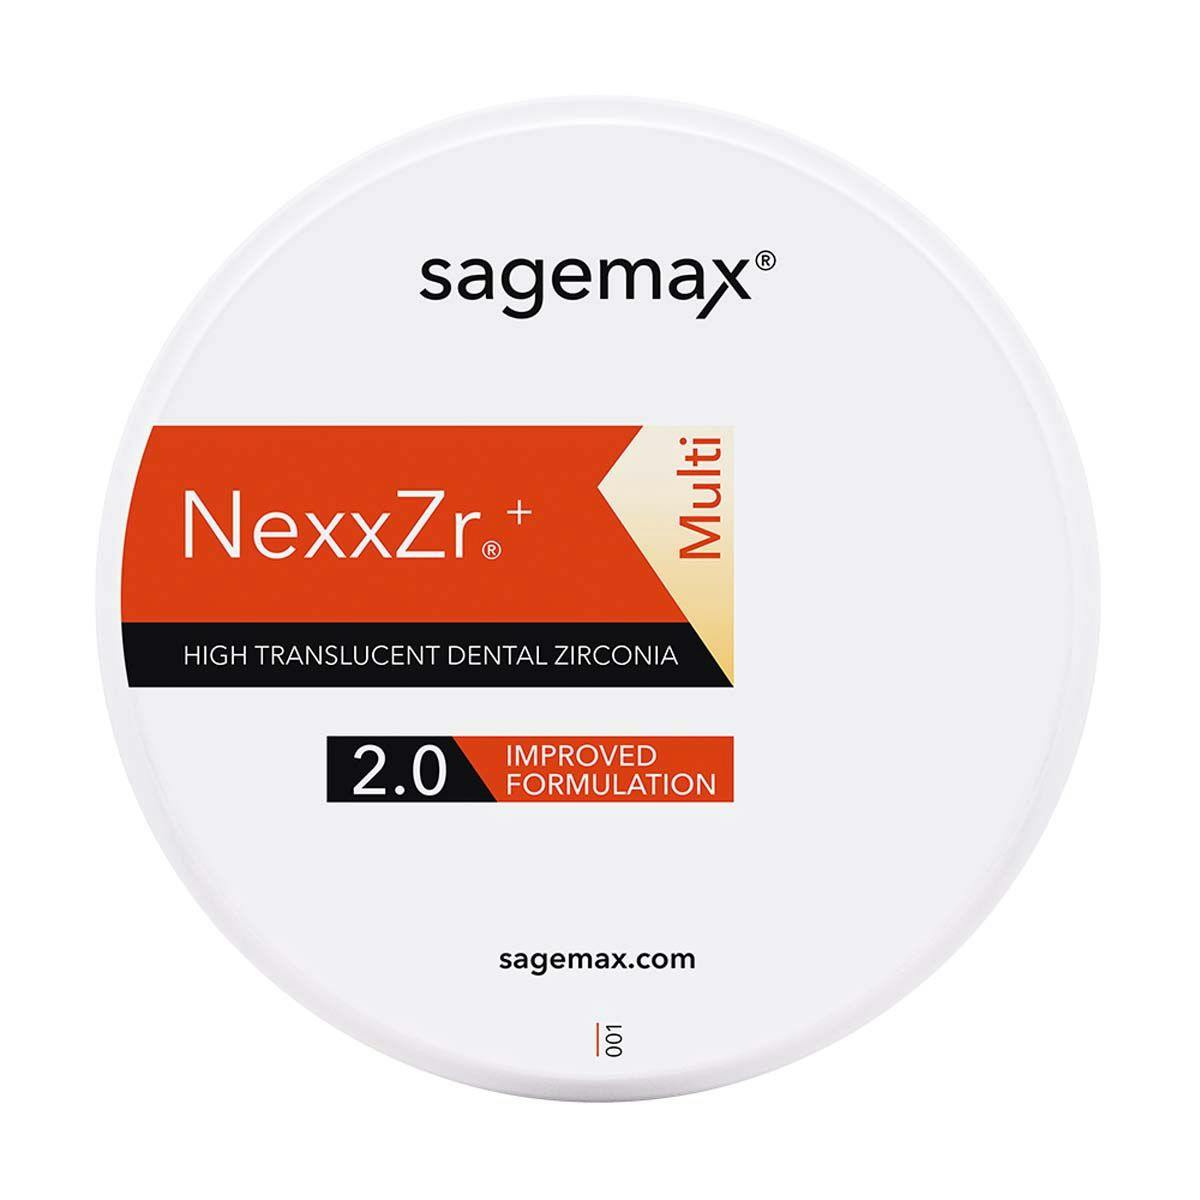 NexxZr+ Multi 2.0 disc from Sagemax. Image credit: © Sagemax Bioceramics, Inc.